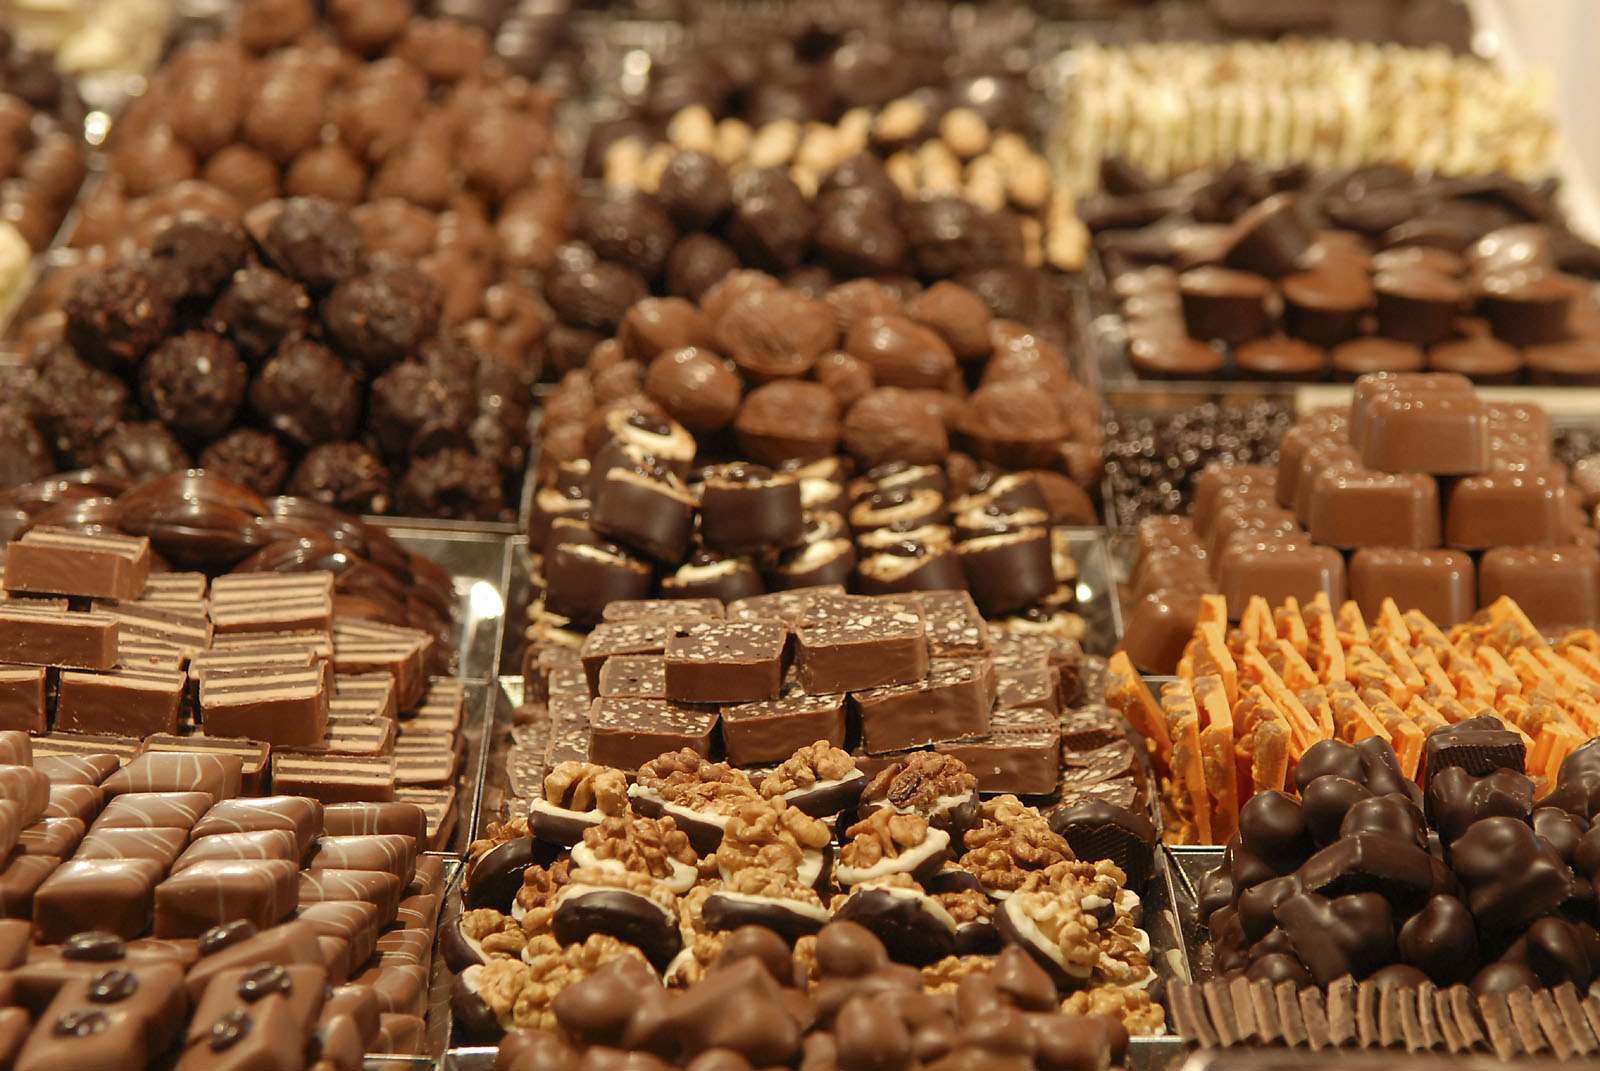 Где шоколад. Таррагона шоколад. Шоколадная фабрика в Италии. Бельгия шоколадная фабрика. Шоколадные изделия.